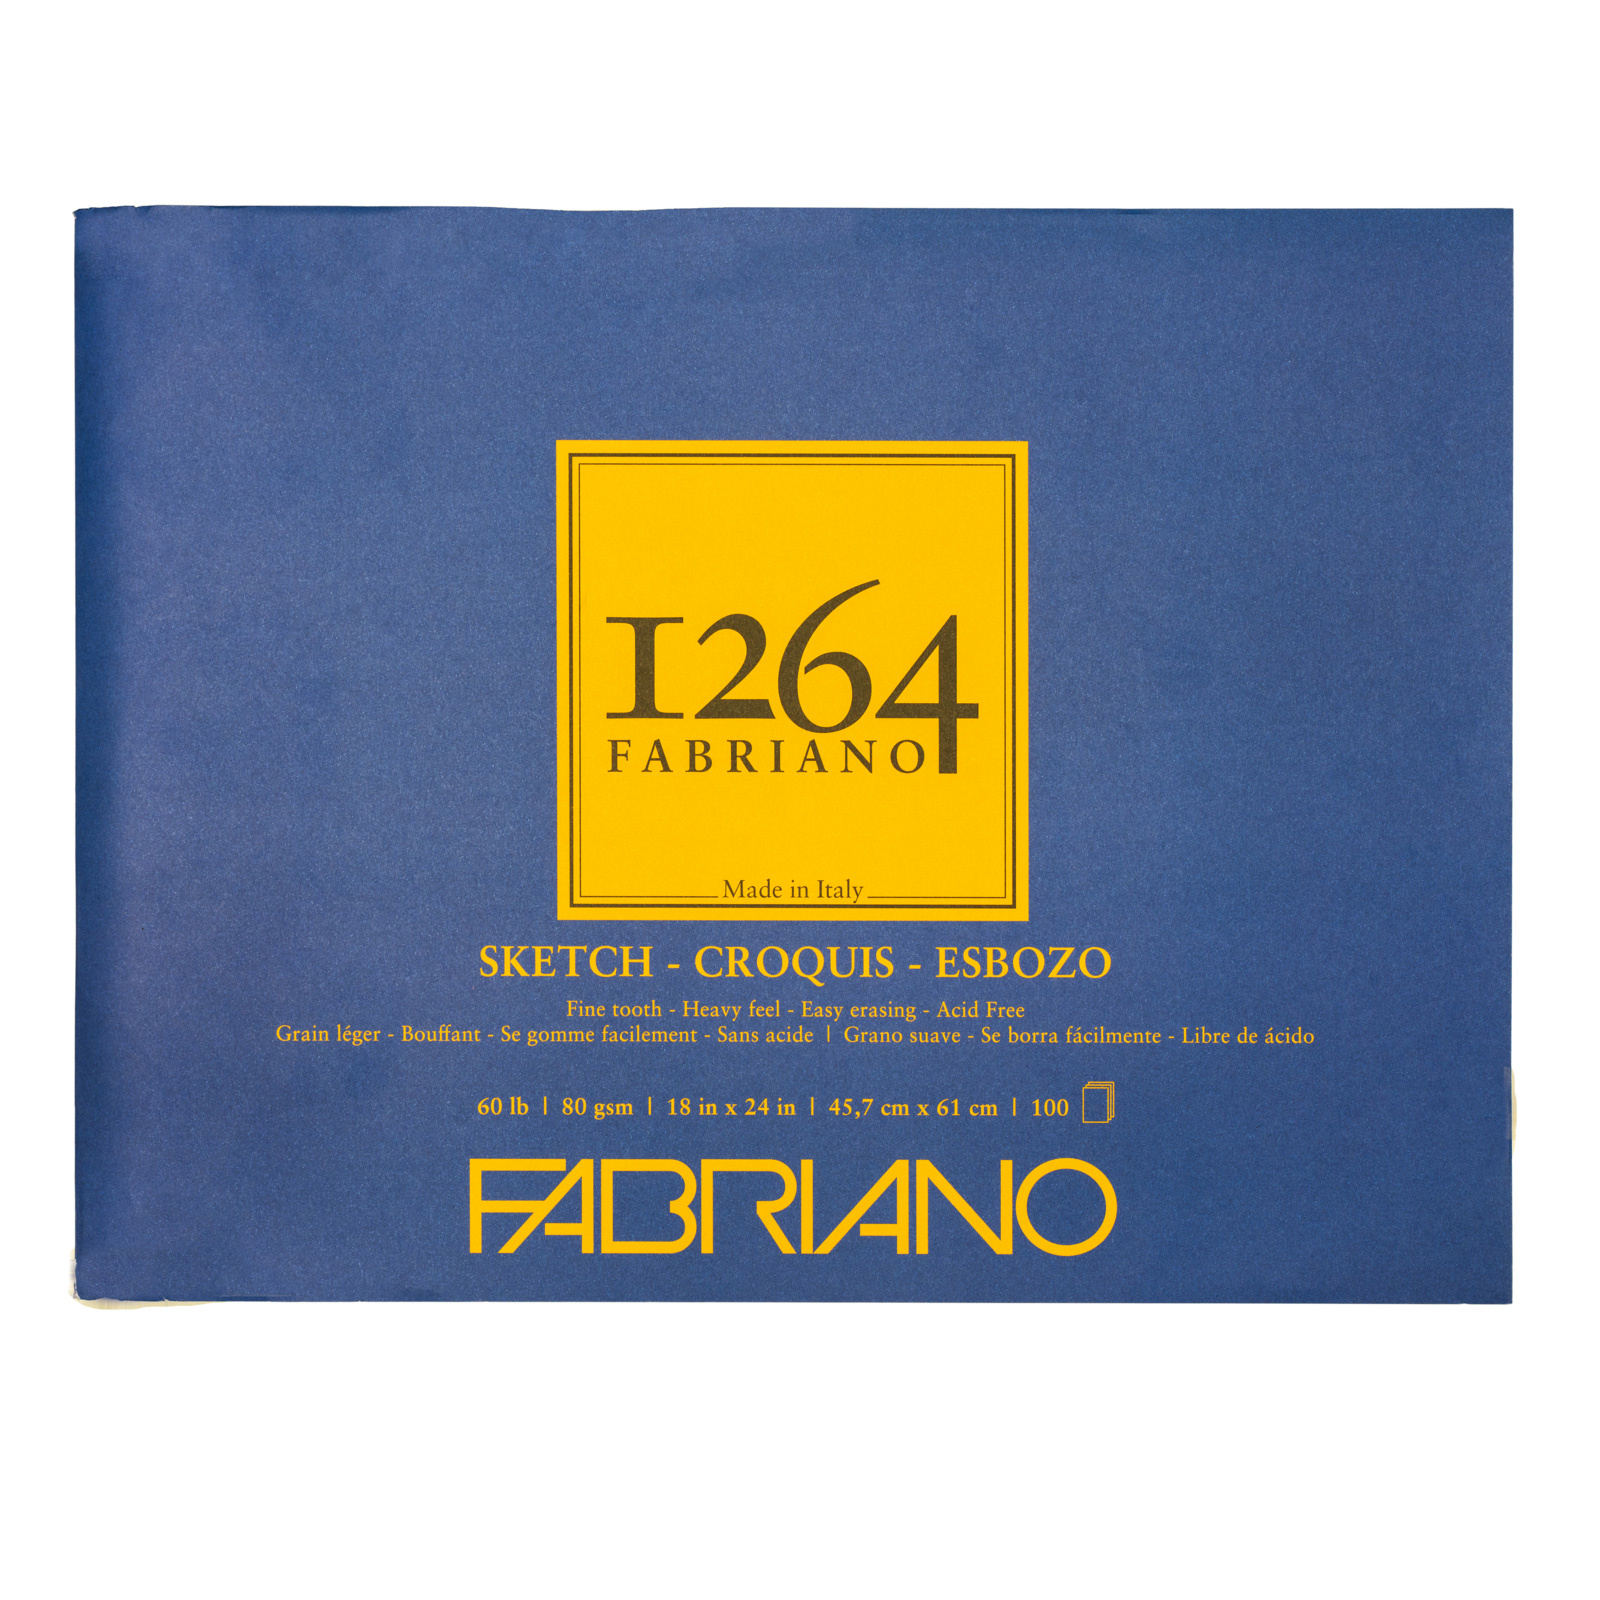 Fabriano 1264 Sketch Pads, Glue-Bound, 18" x 24"